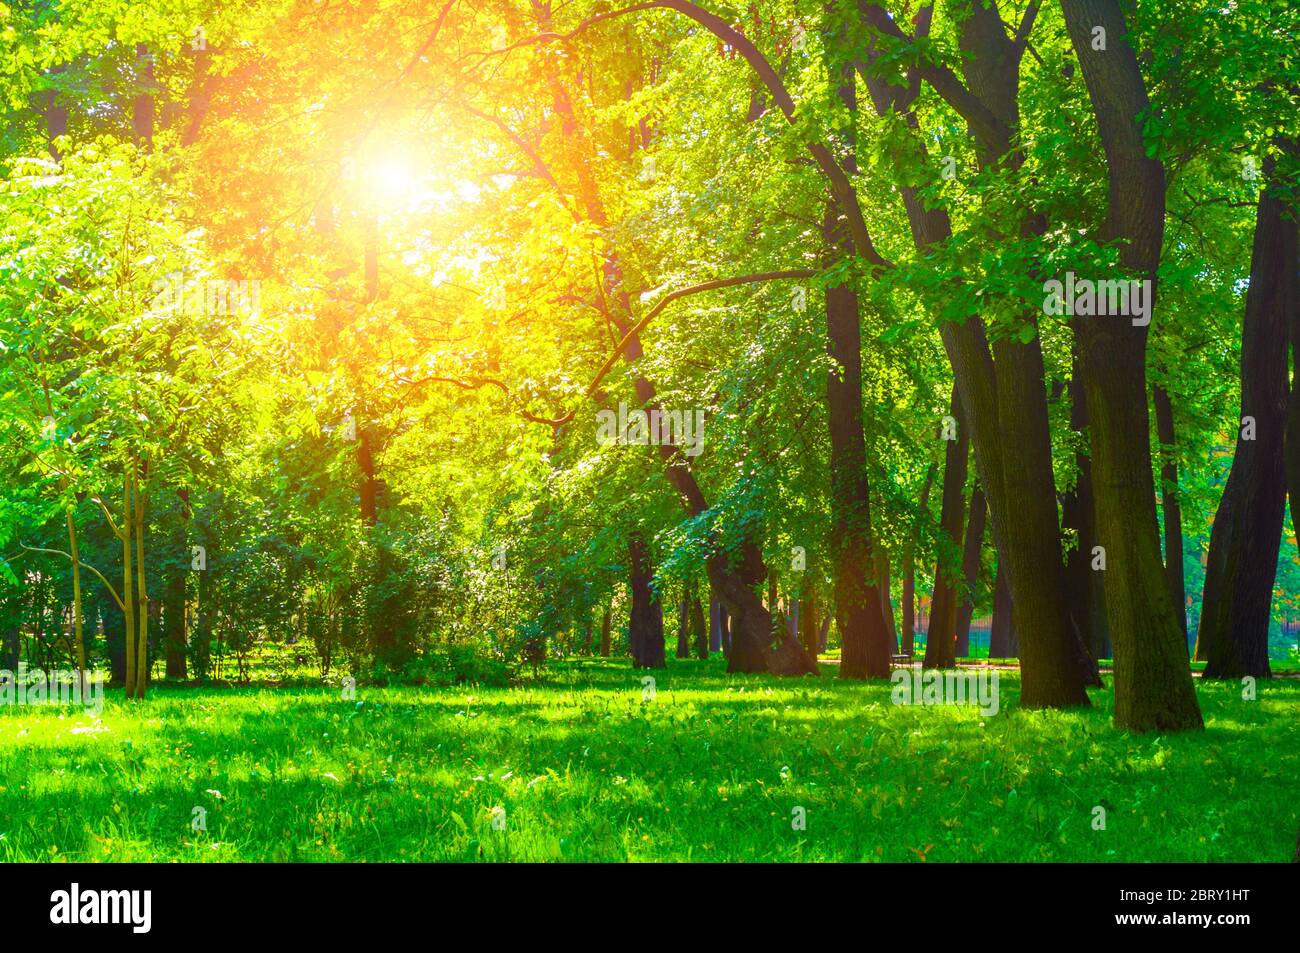 Estate parco soleggiata paesaggio. Parco estivo con alberi verdi decidui in tempo soleggiato Foto Stock